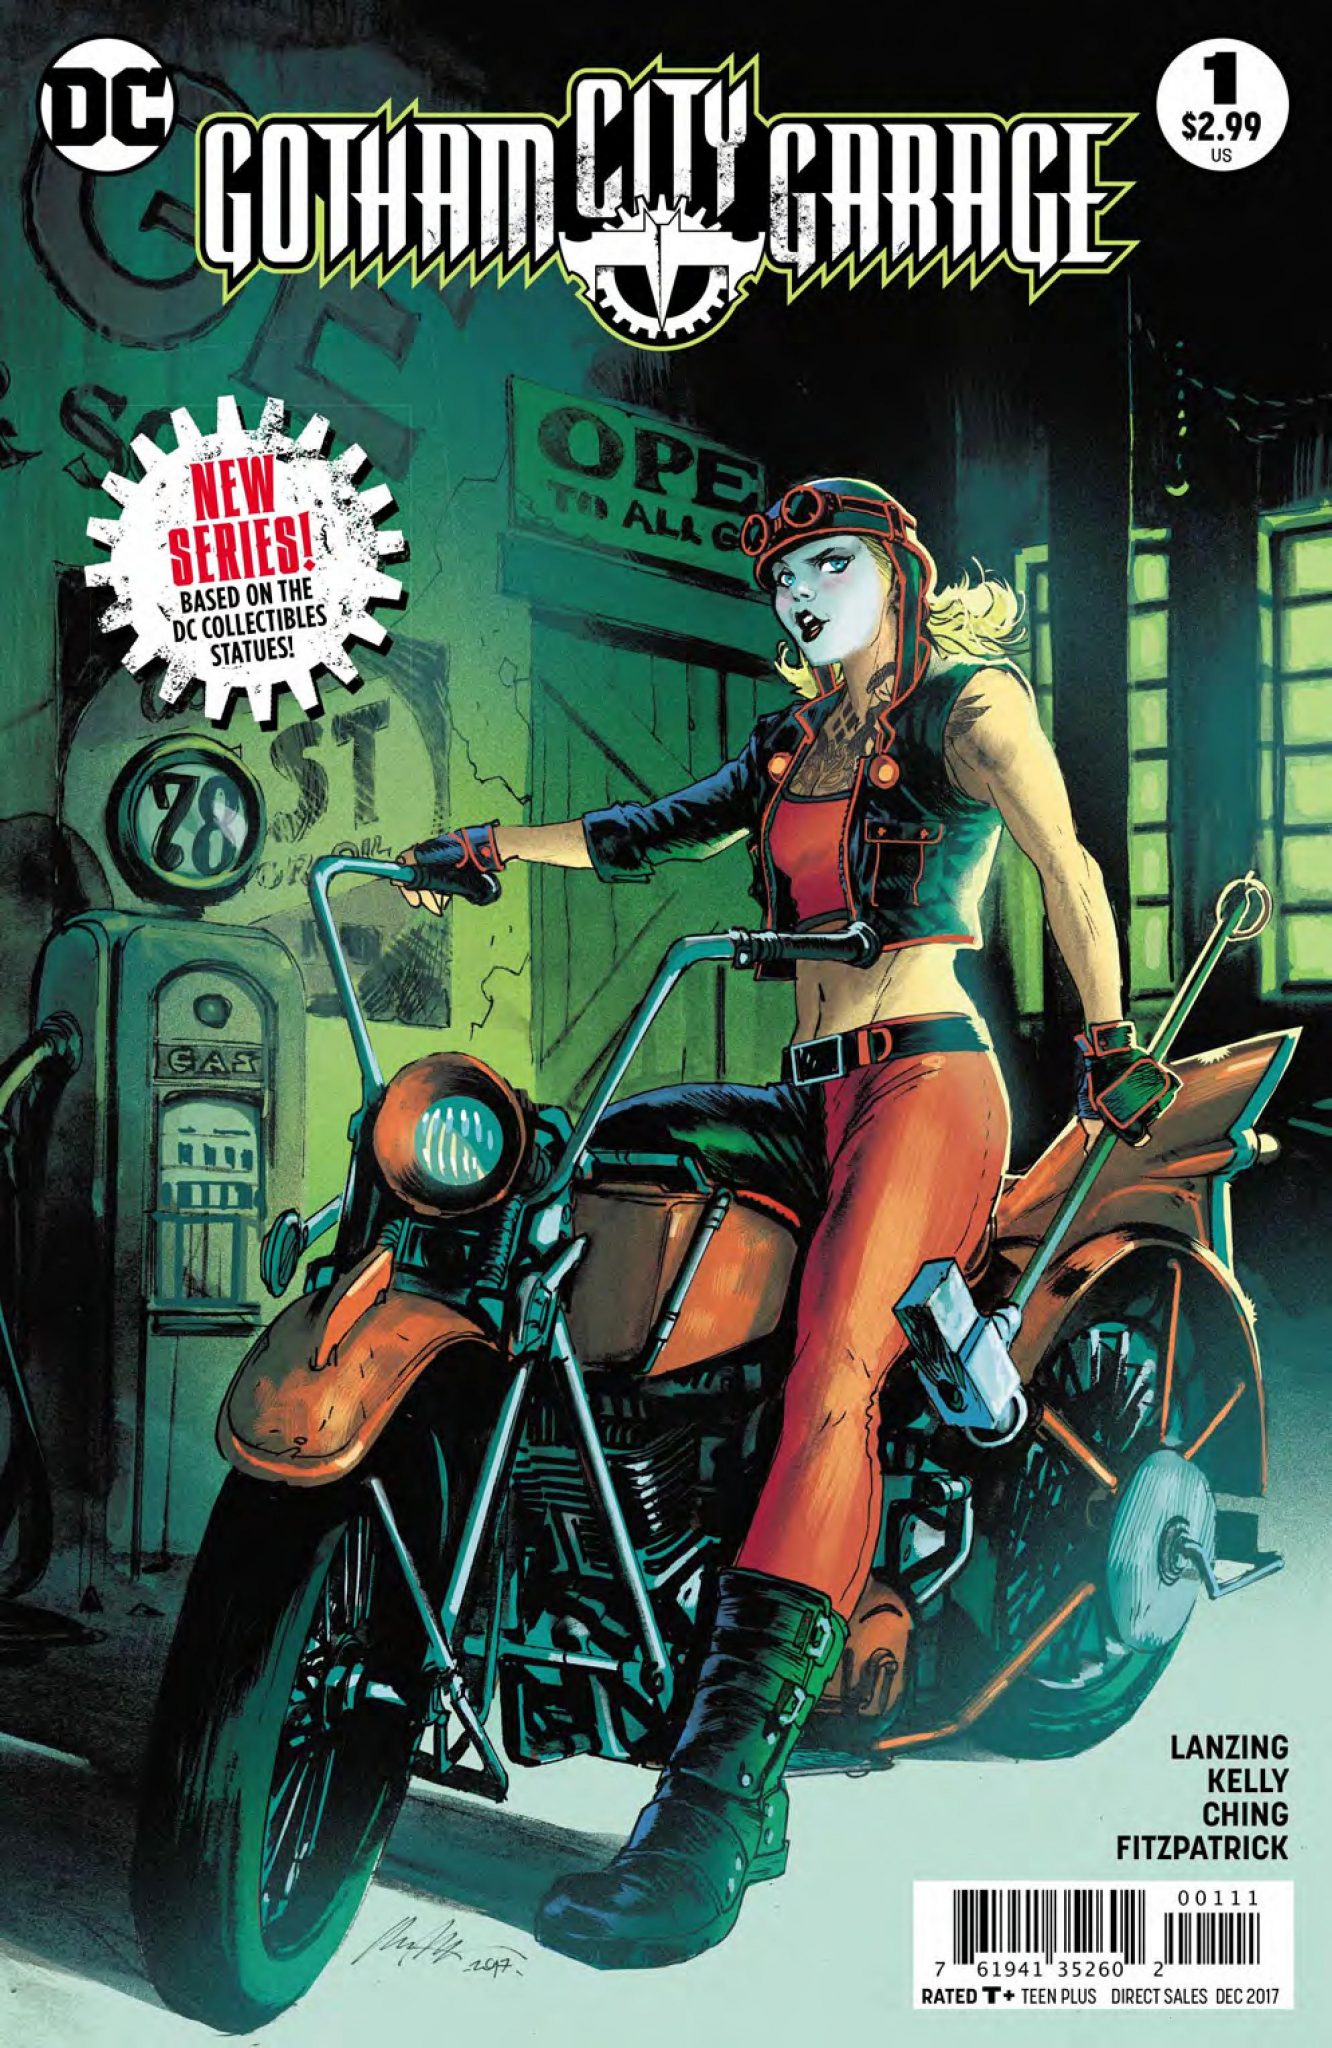 Gotham City Garage #1 Review